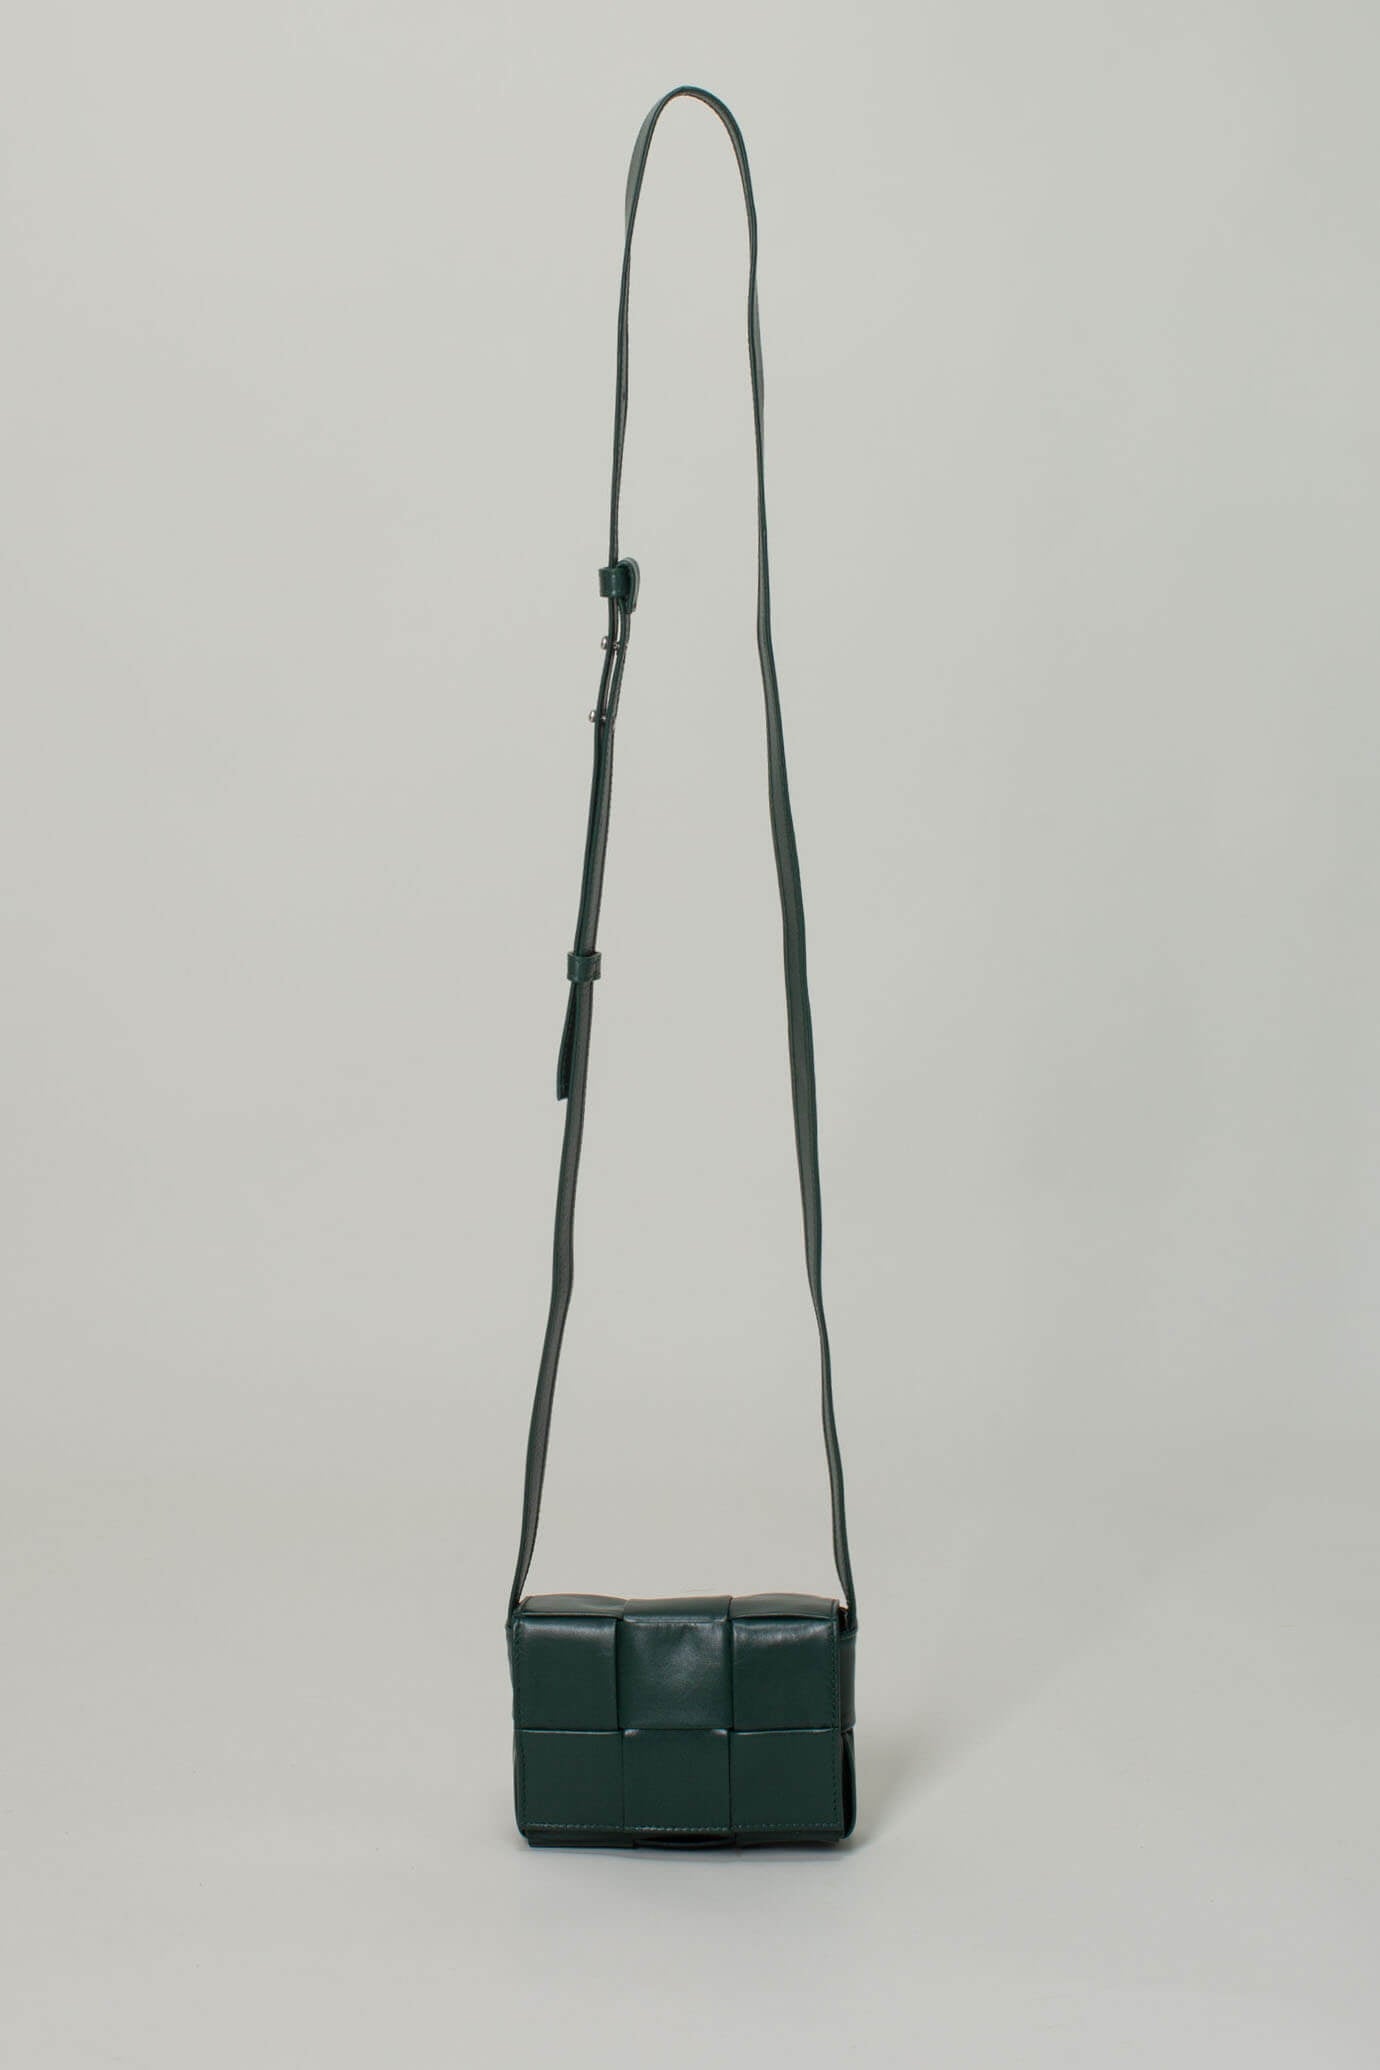 Bottega Veneta Magnetic Closure Handbags